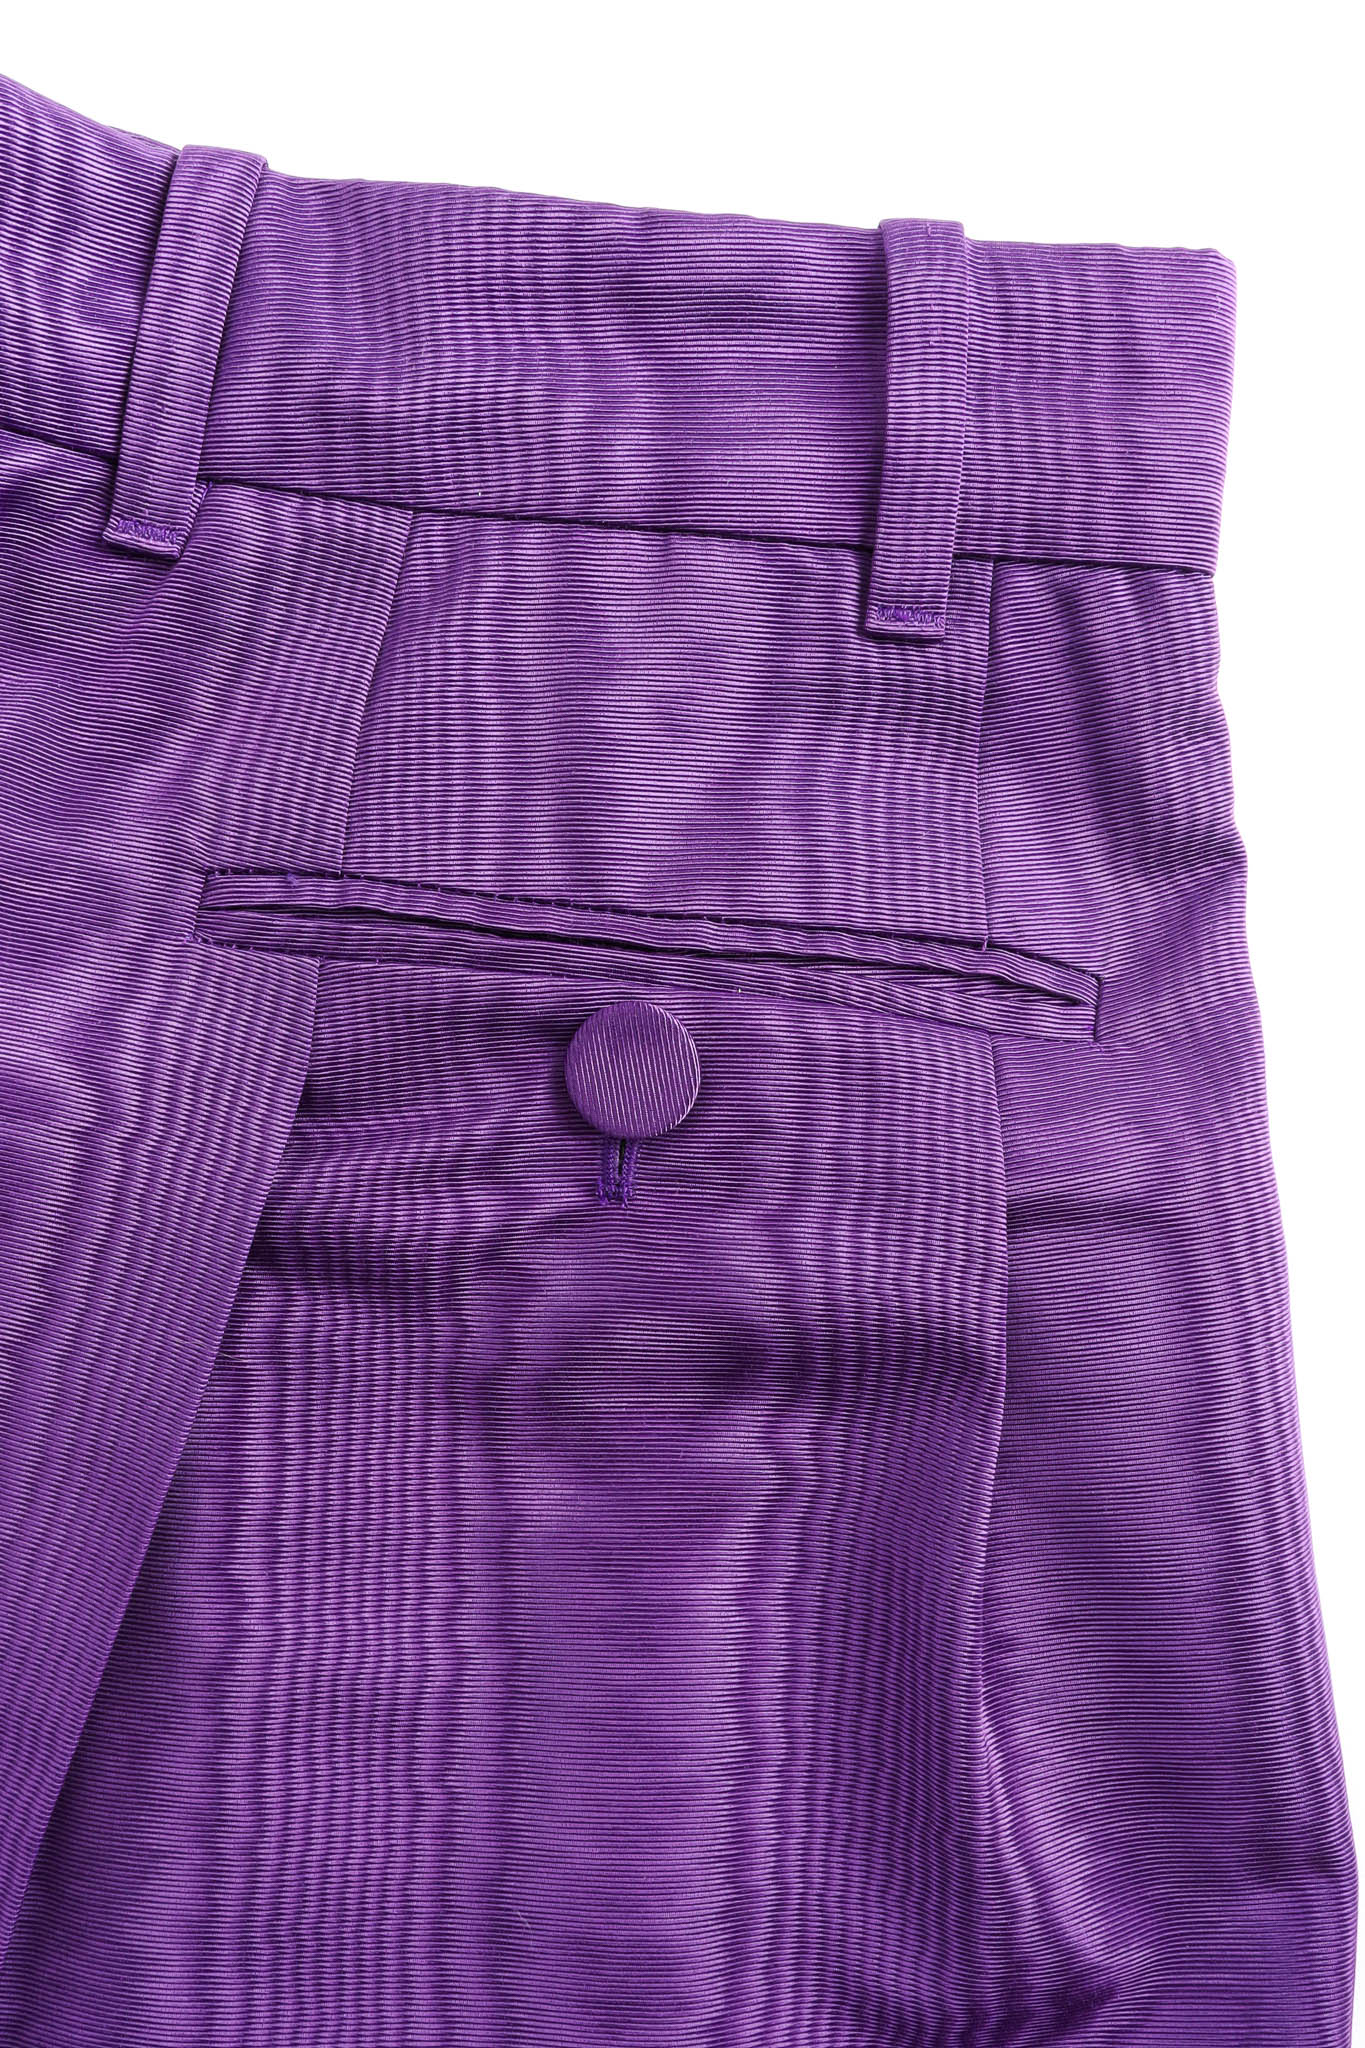 Vintage Gucci Wood Grain Print Trouser Pant pocket @ Recess Los Angeles